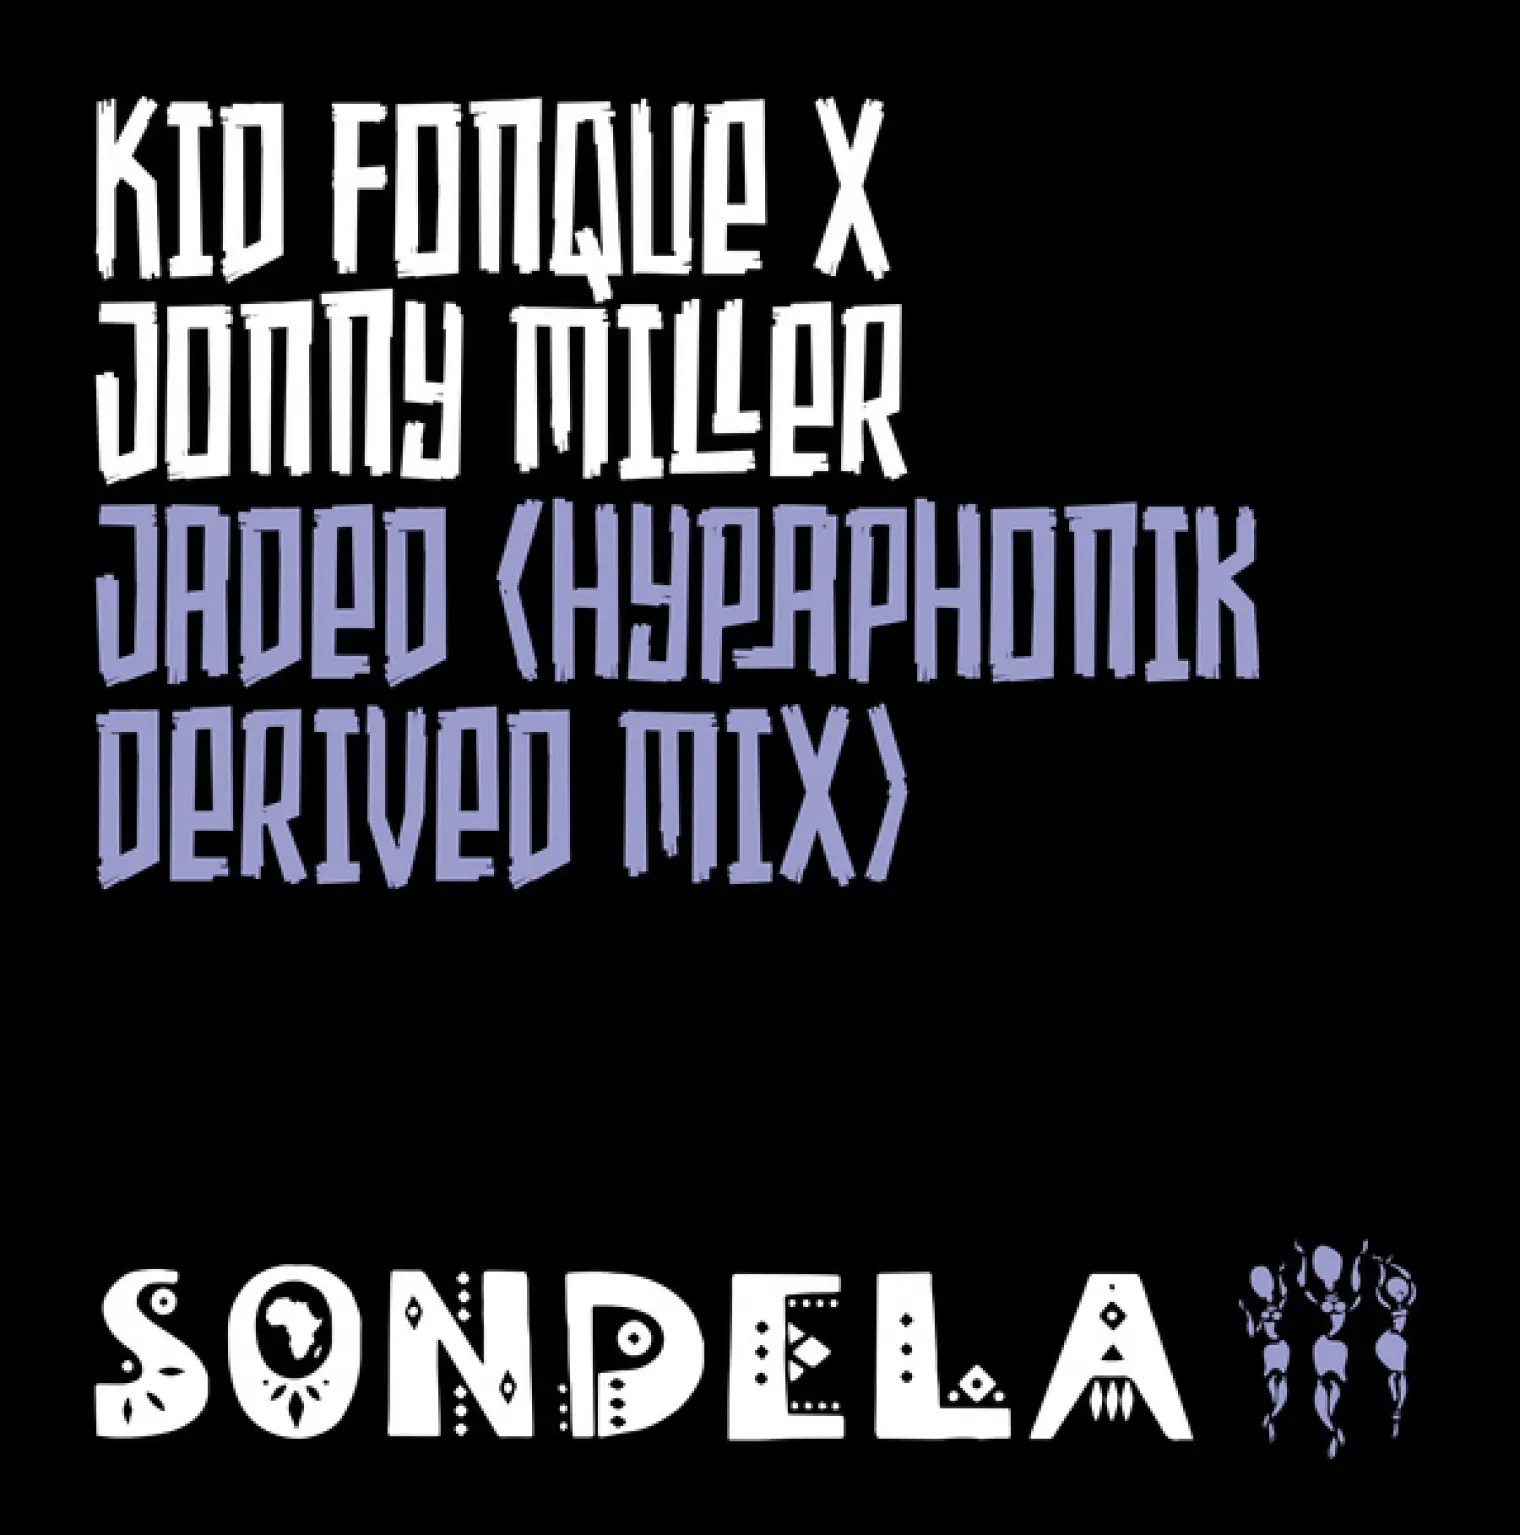 Jaded (Hypaphonik Derived Mix) -  Kid Fonque 